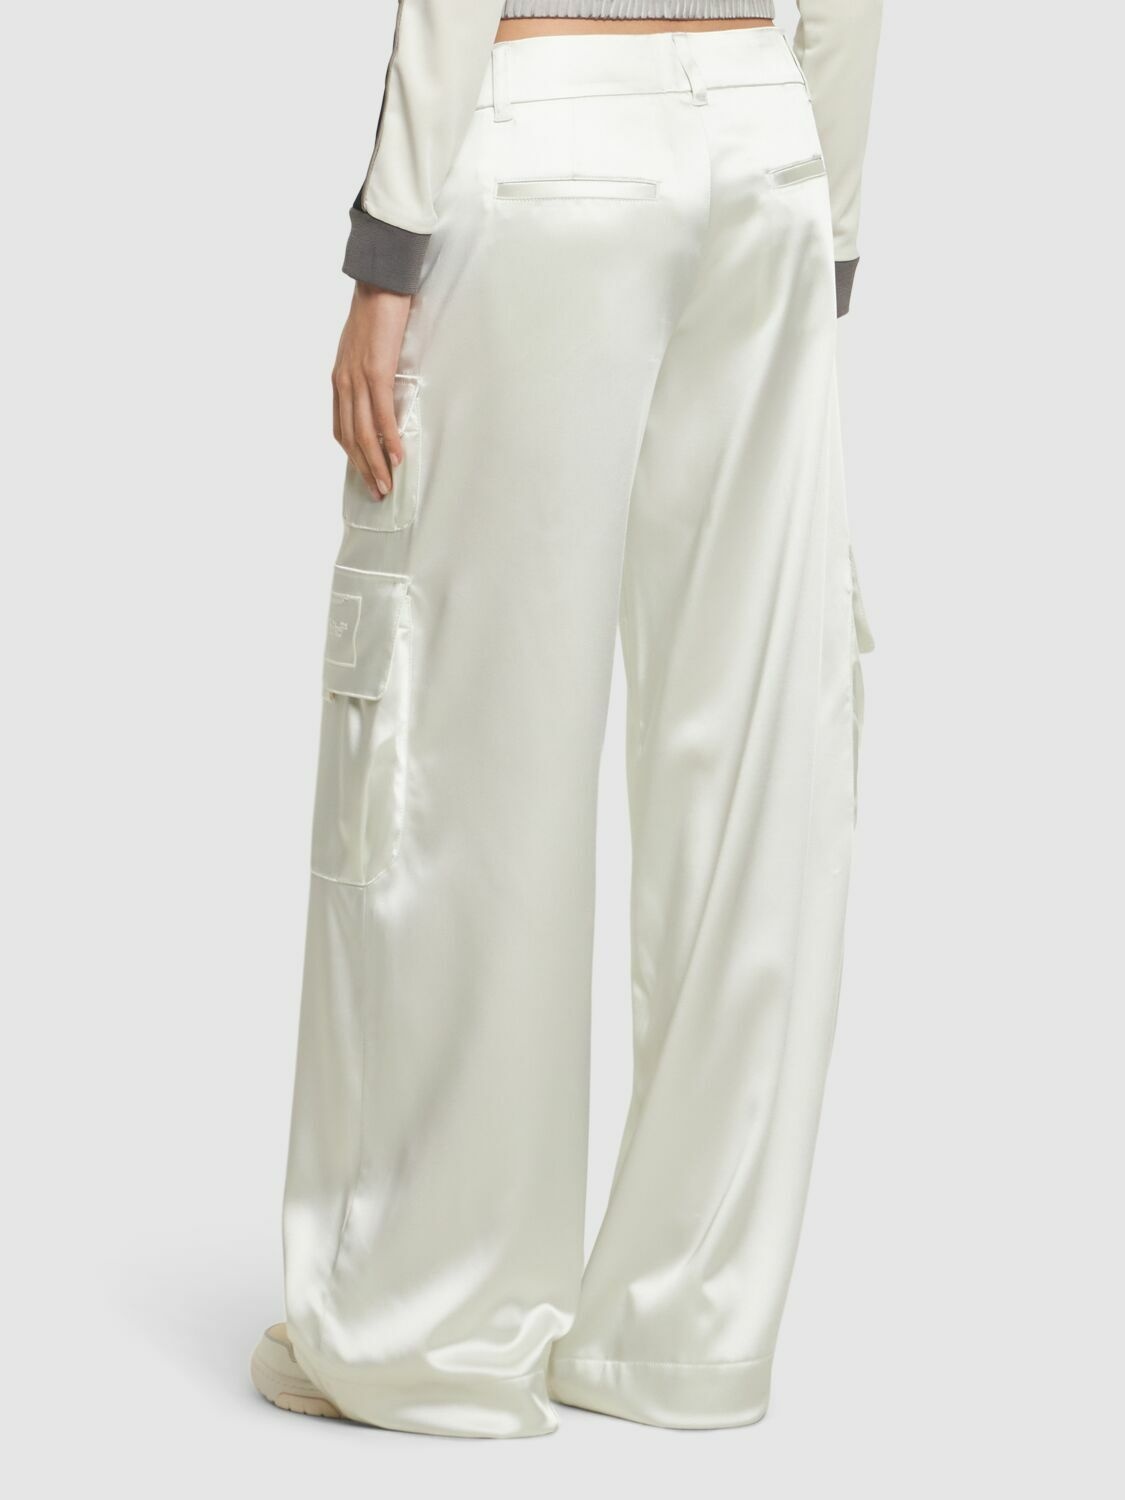 Buy Ecru Solid Light Festive Plus Size Slim Pants Online - W for Woman